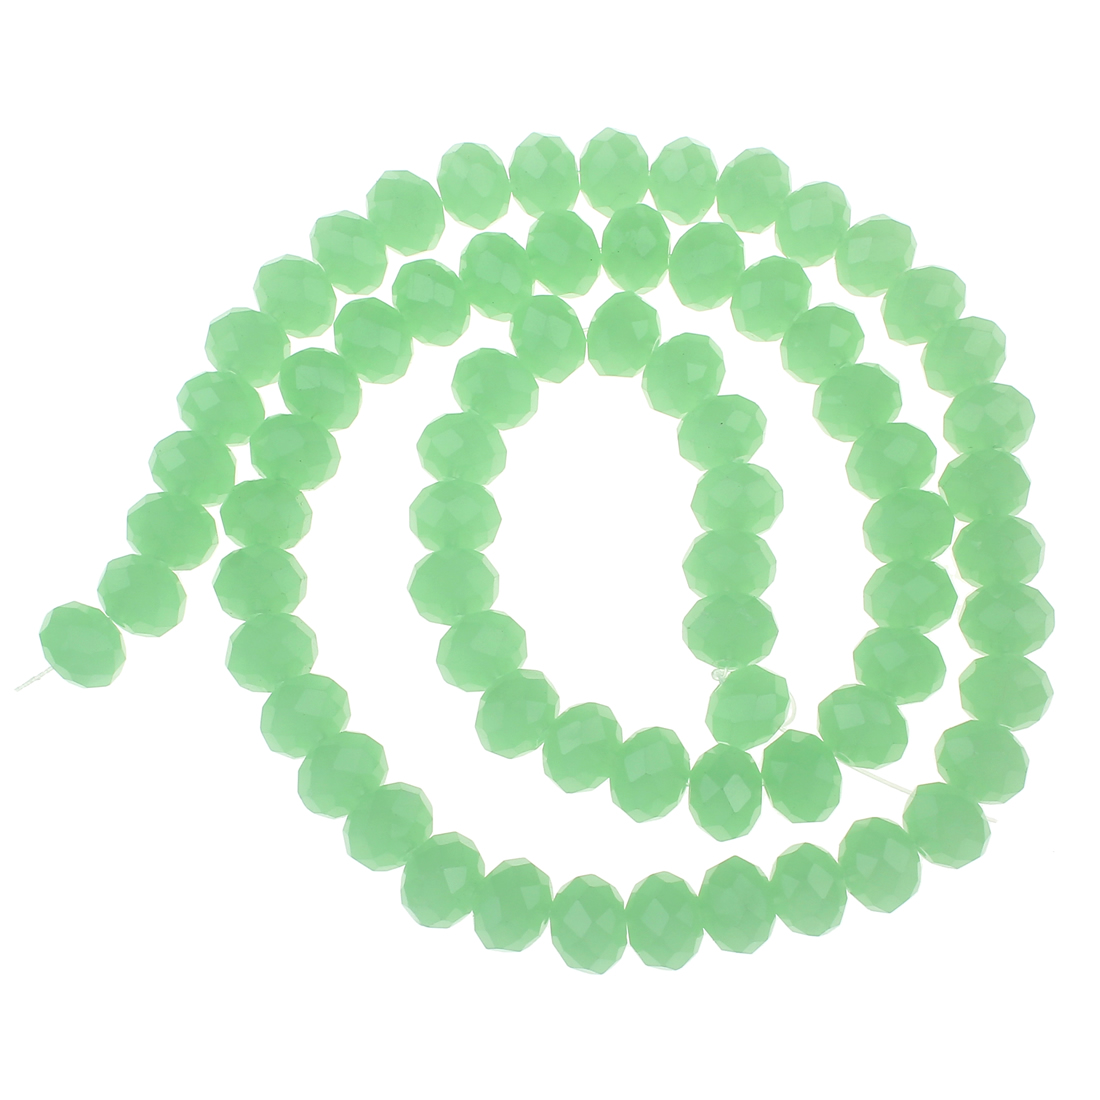 4:cristal verde